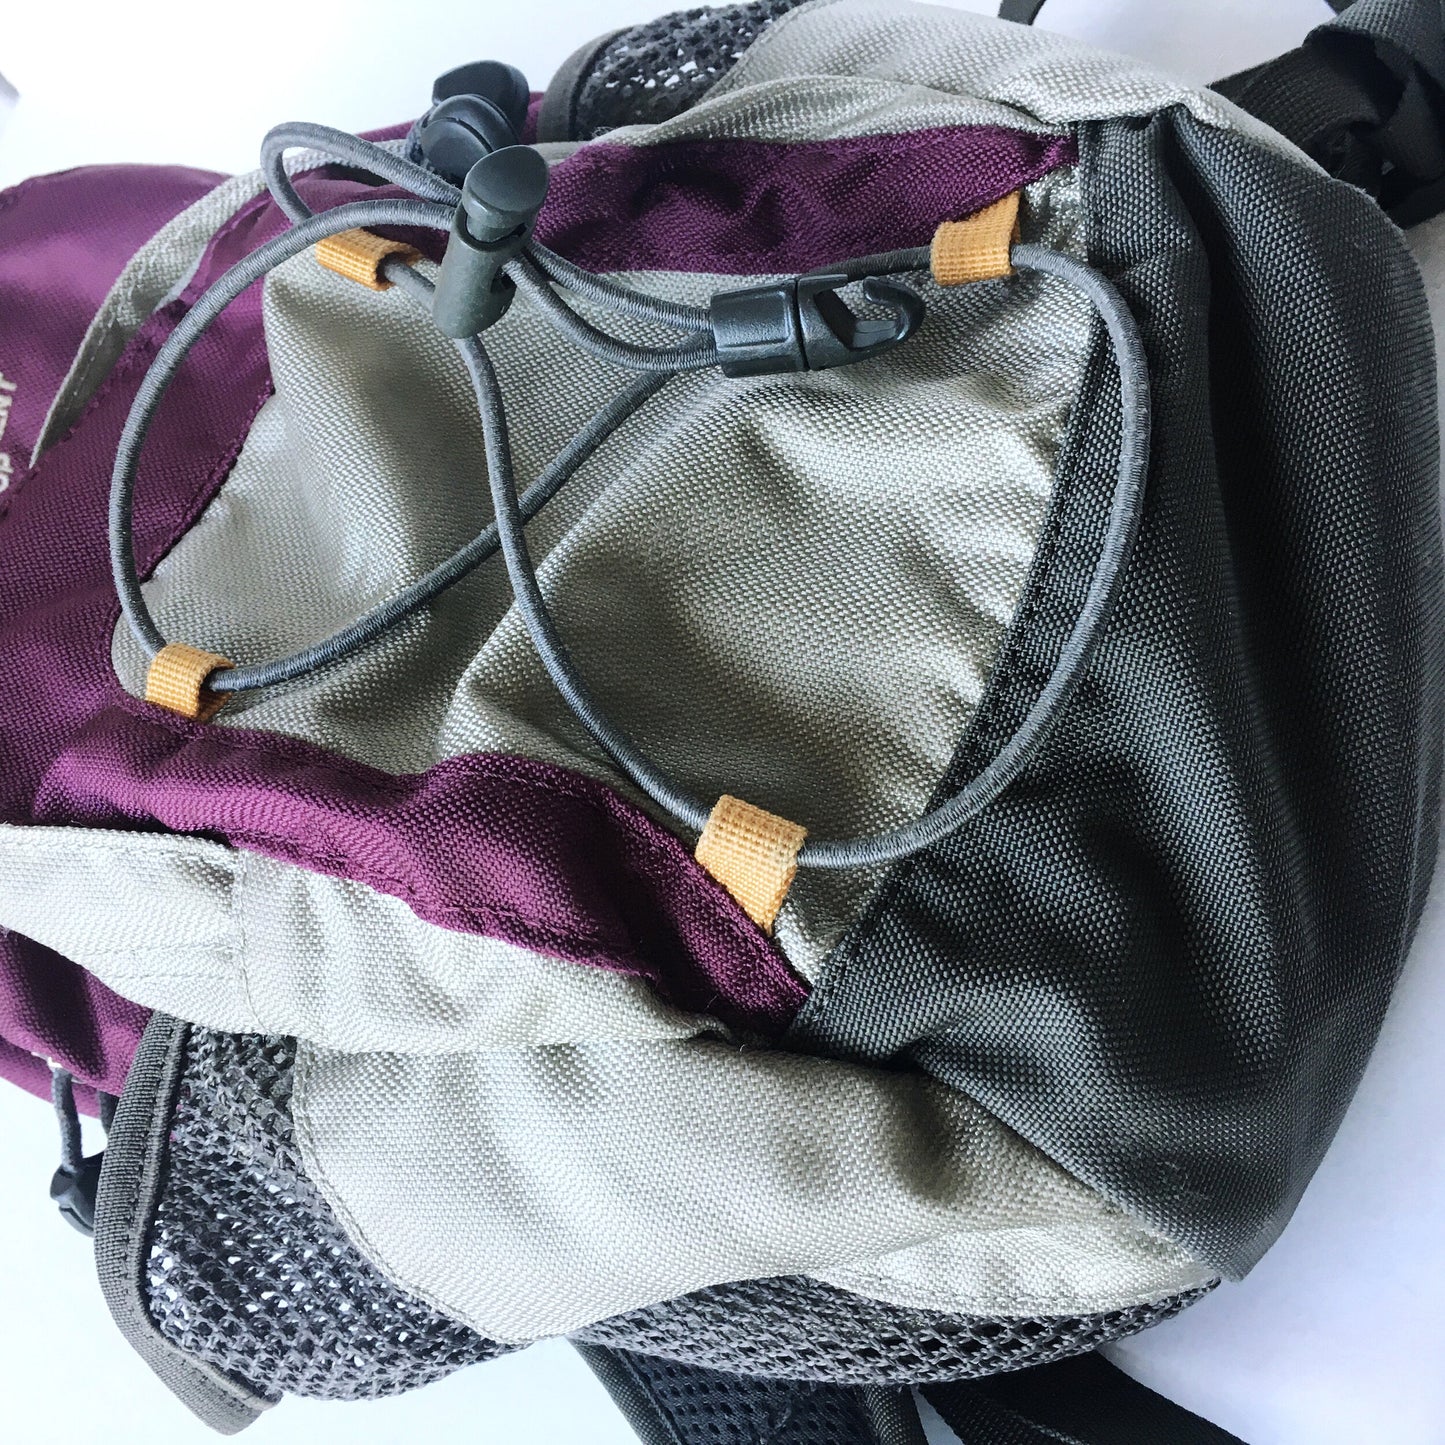 MEC day pack hiking backpack